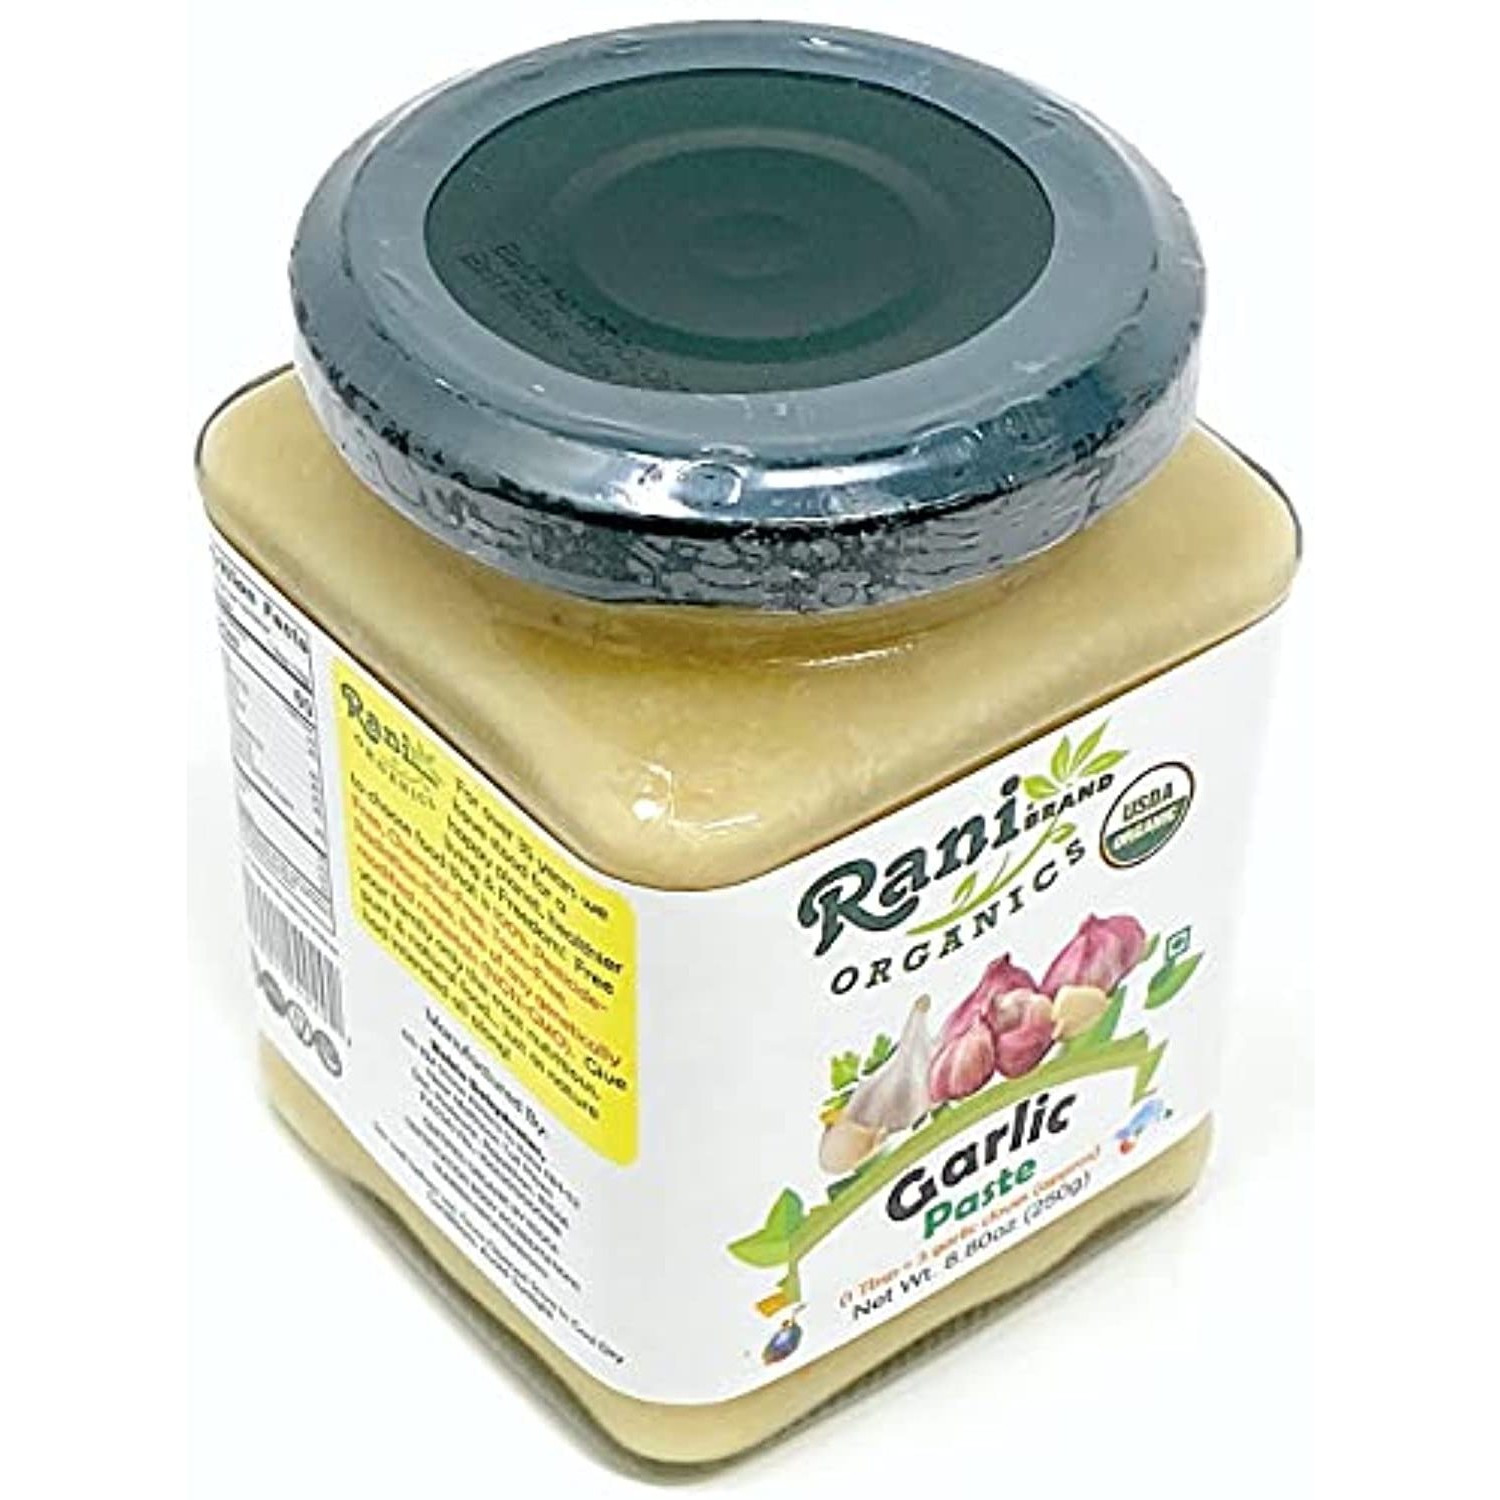 Rani Organic Garlic Cooking Paste 8.80oz (250g) ~ Vegan | Glass Jar | Gluten Free | NON-GMO | No Colors | Indian Origin | USDA Certified Organic